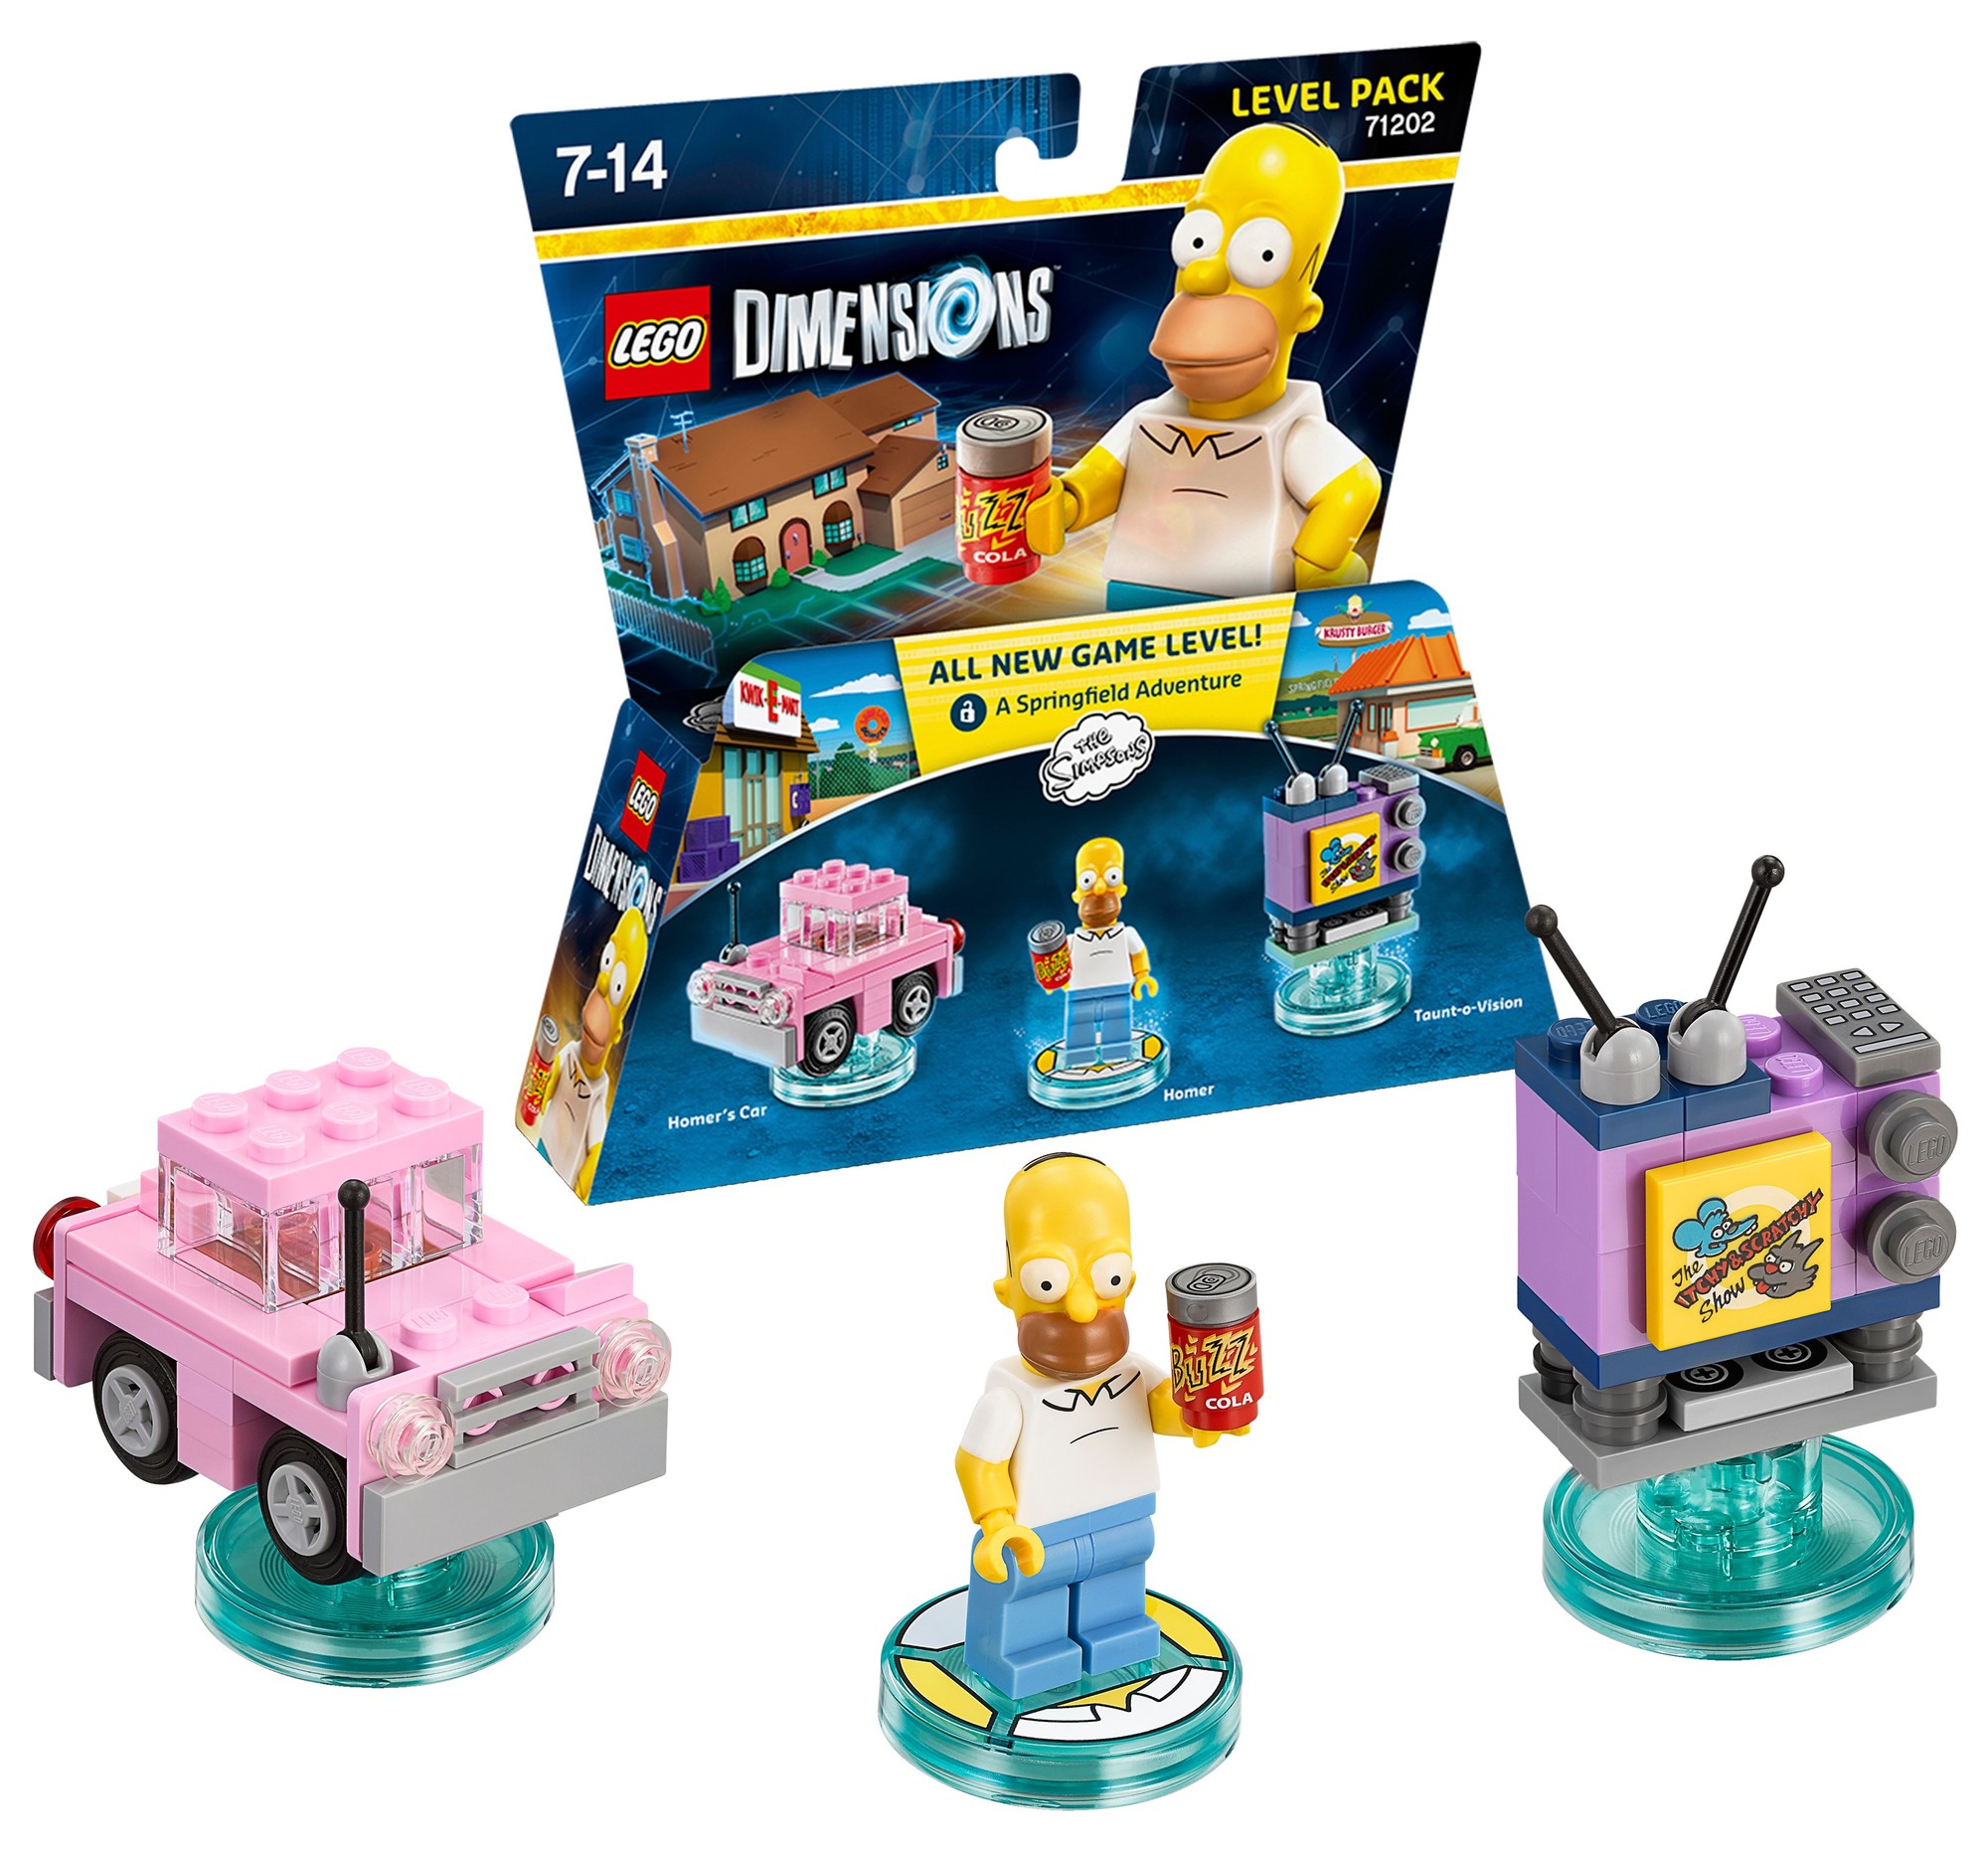 LEGO Dimensions Level Pack - The Simpsons - Gigantti verkkokauppa